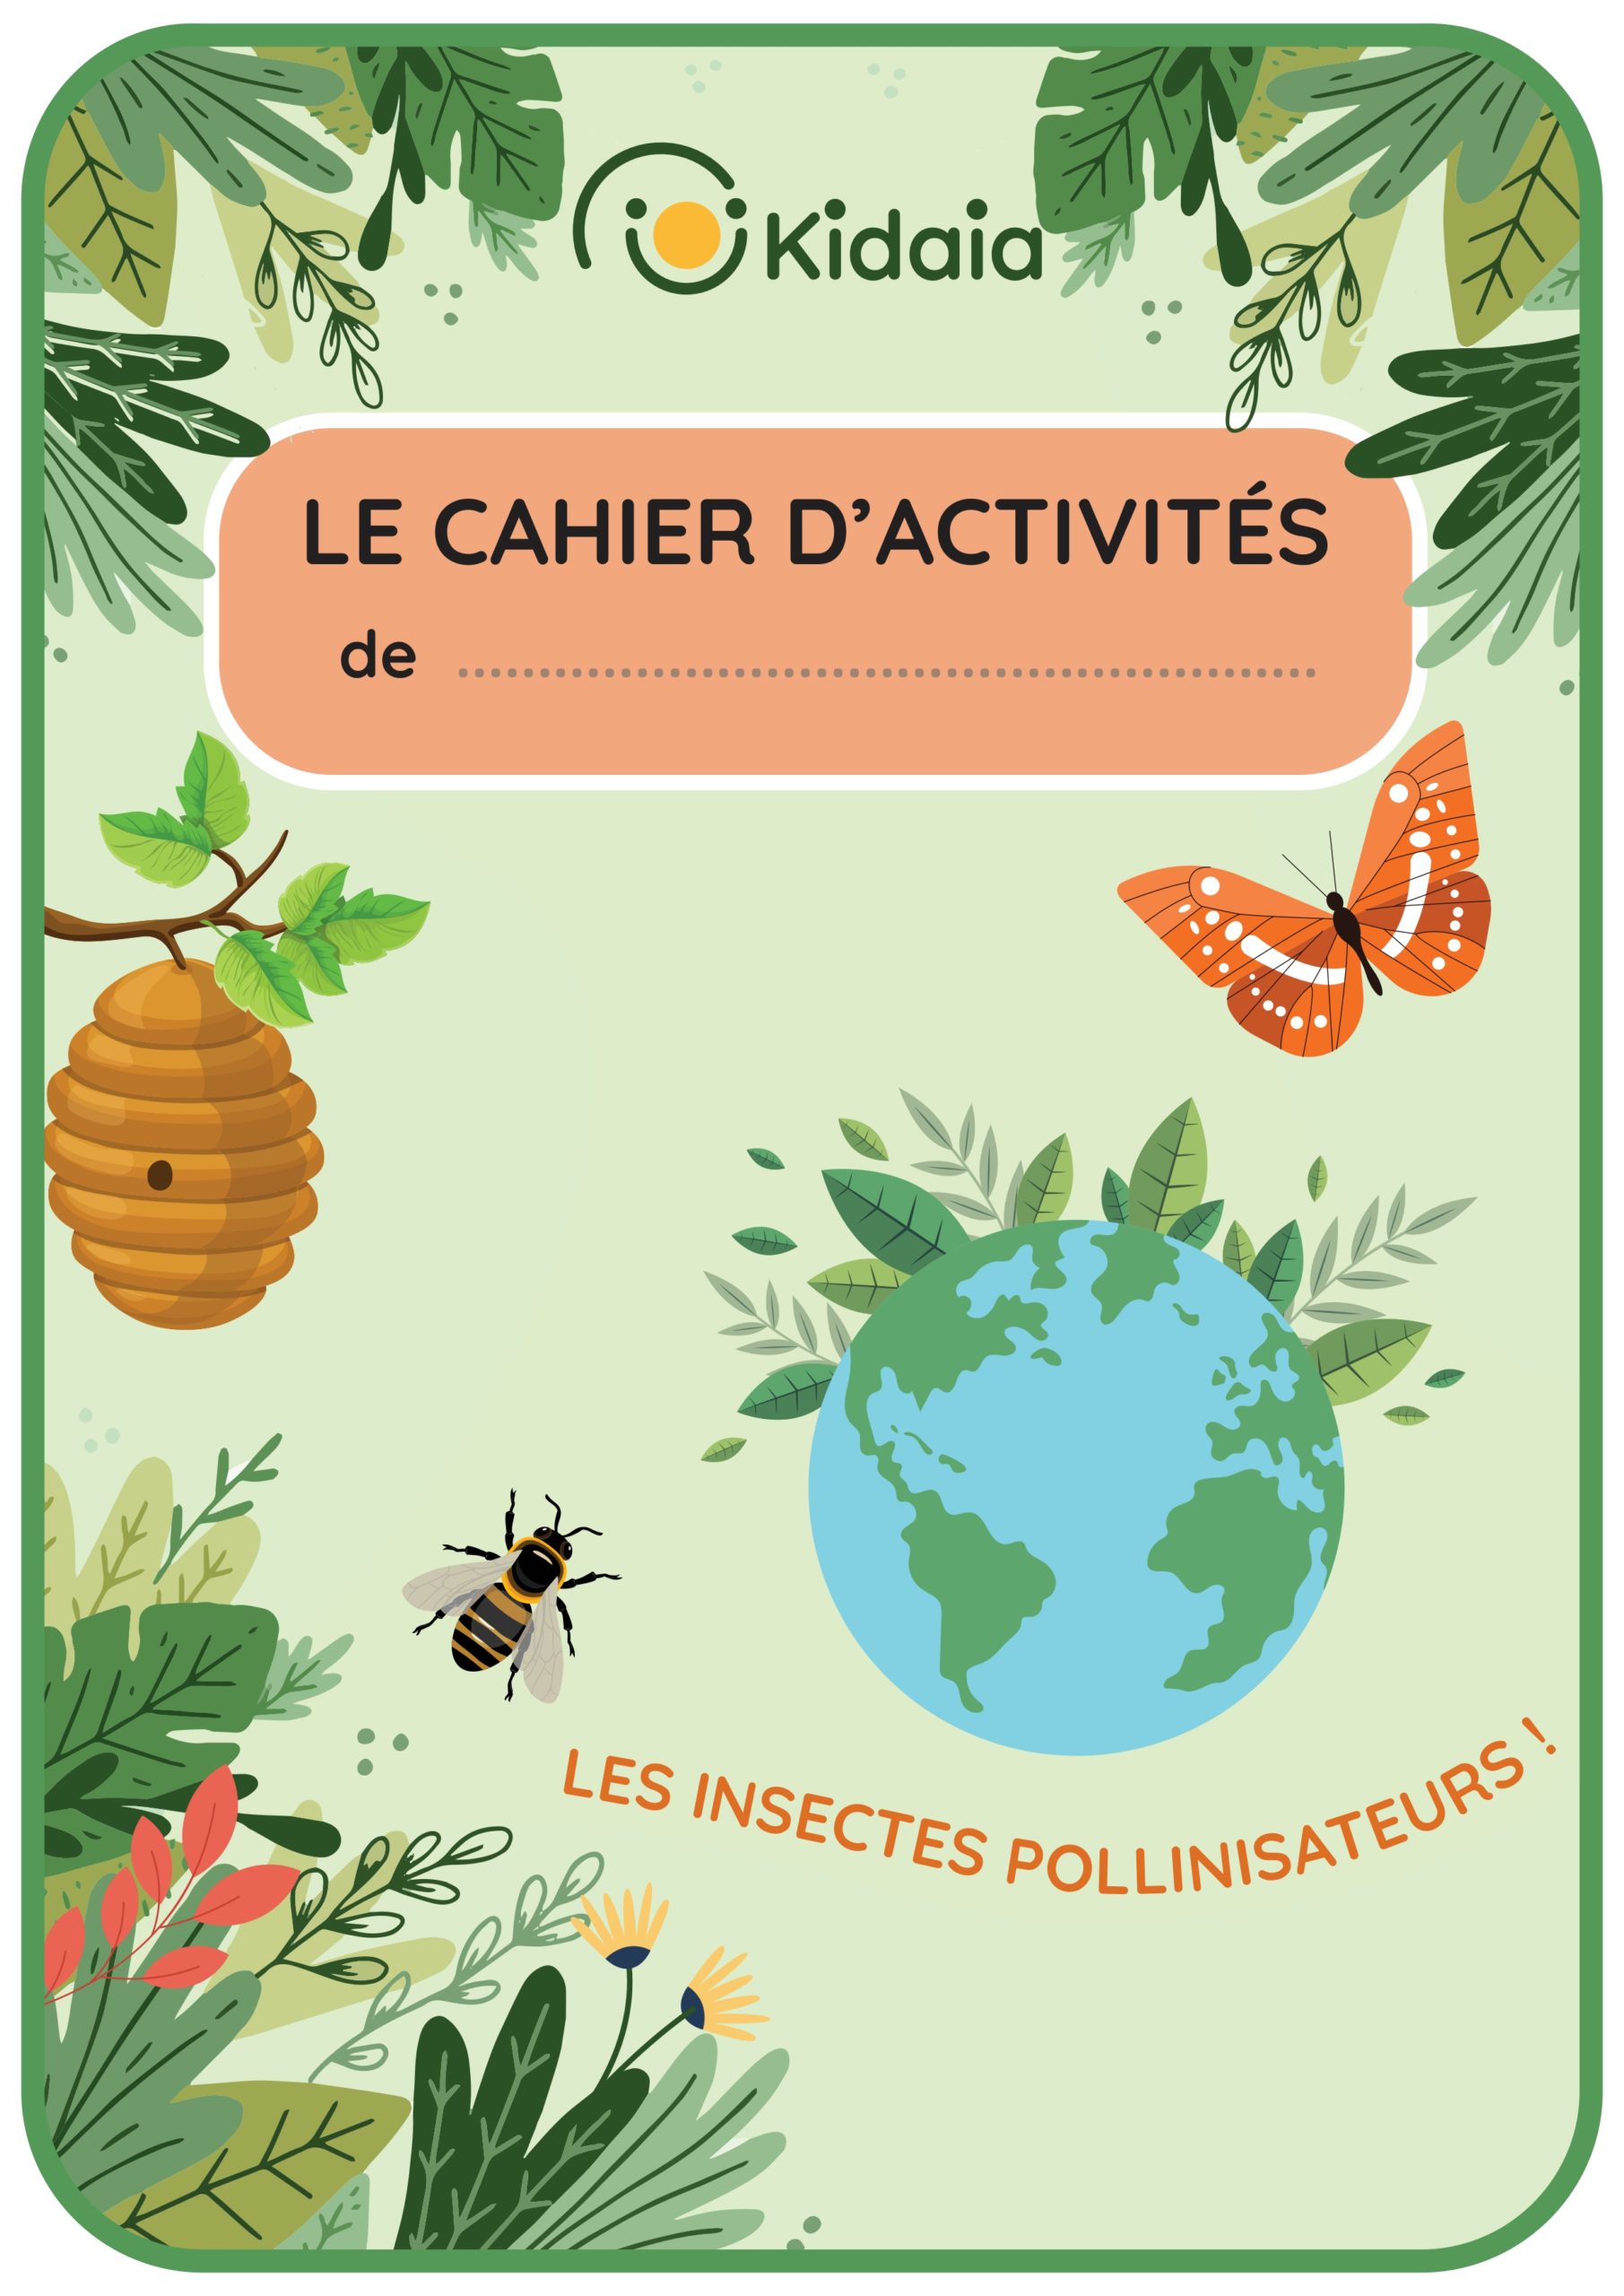 Les insectes pollinisateurs - KIDAIA_page-0001